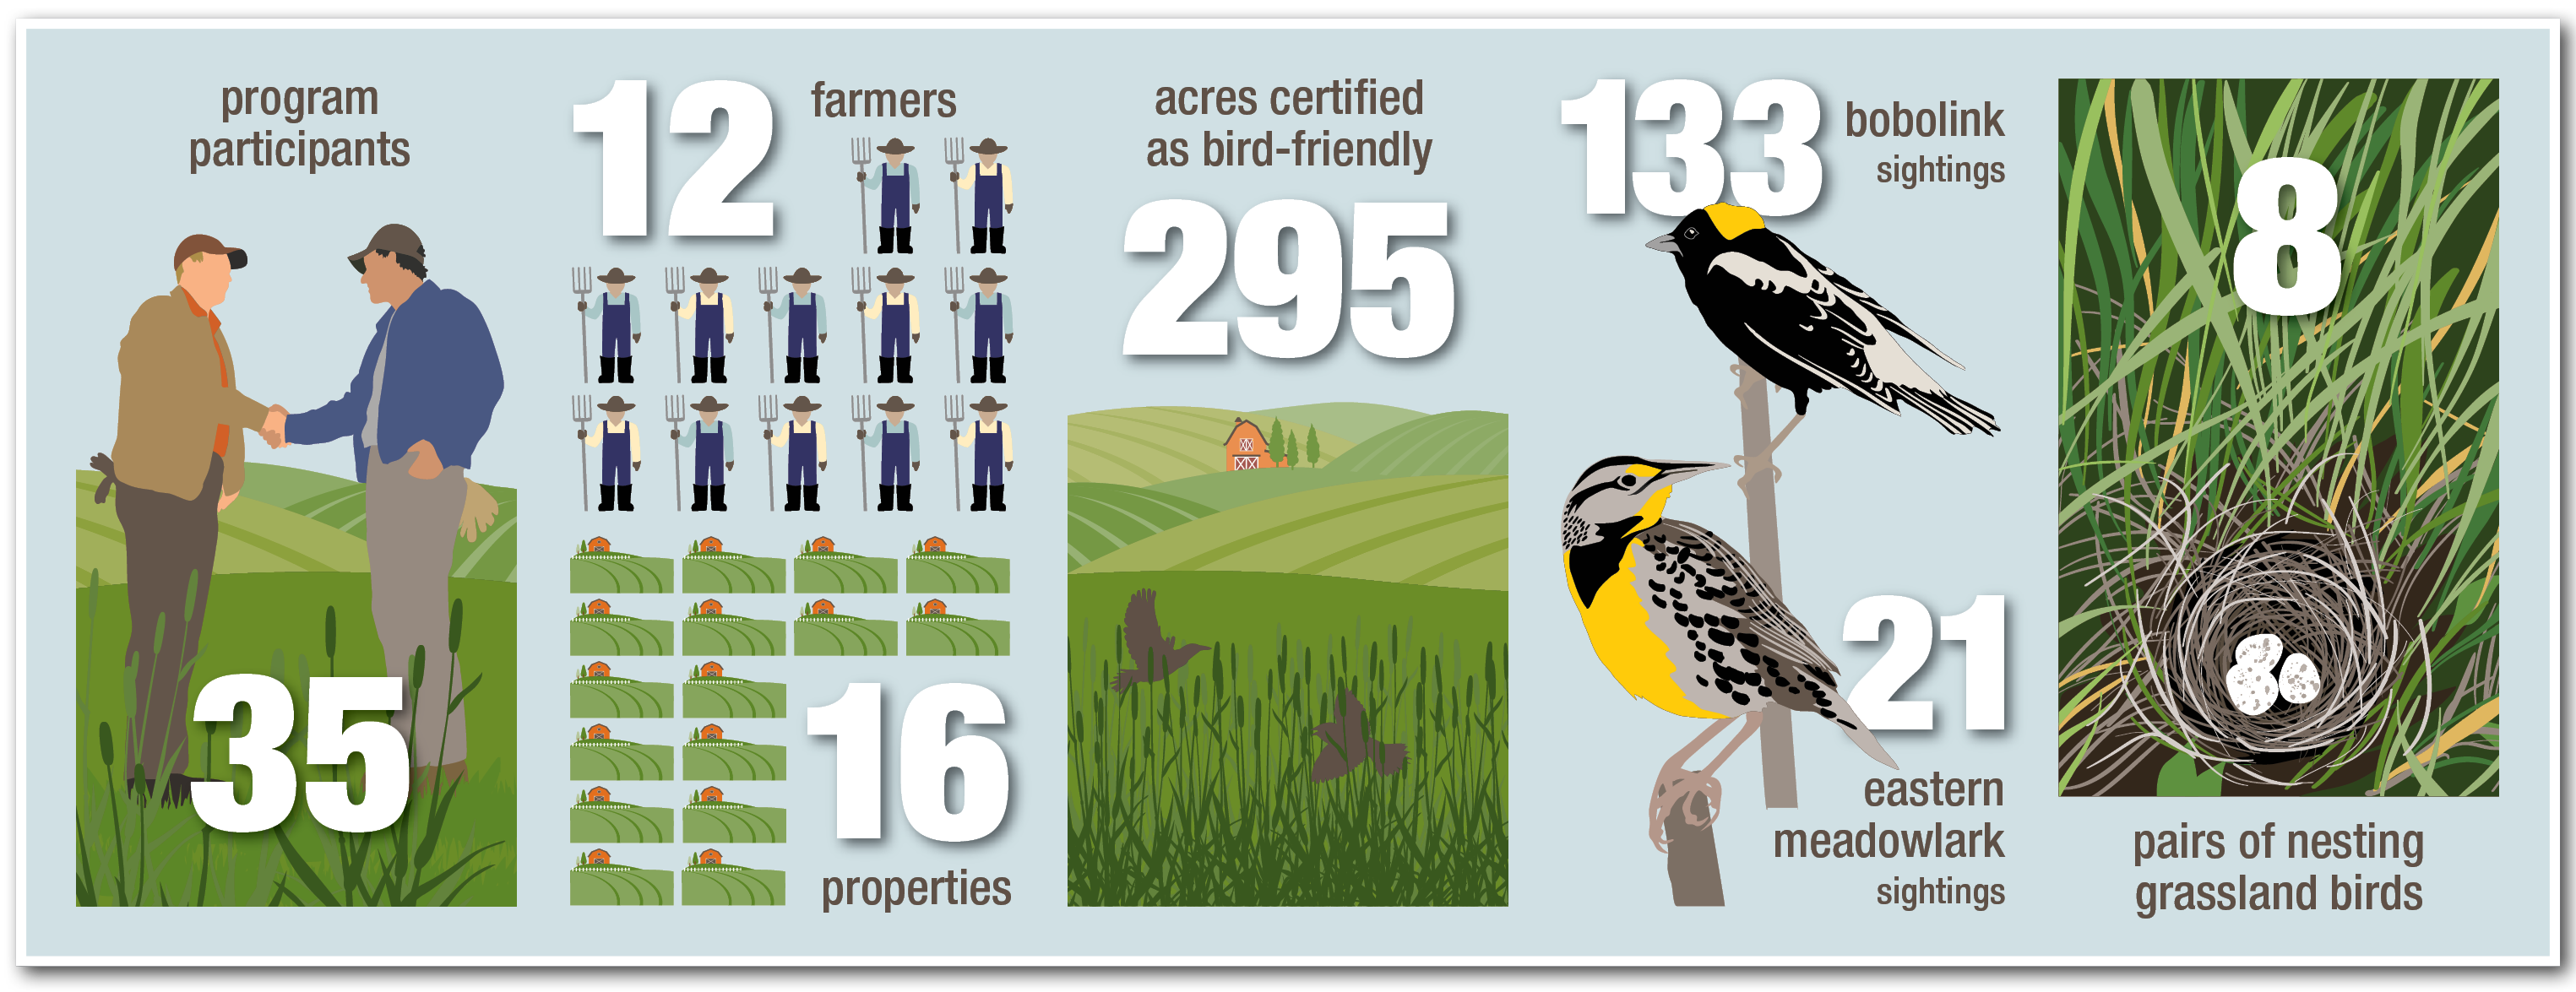 Bird Friendly Certified Hay Program. 35 program participants, 12 farmers, 16 properties, 295 acres certified as bird-friendly, 133 bobolink sightings, 21 eastern meadowlark sightings, 8 pairs of nesting grassland birds.